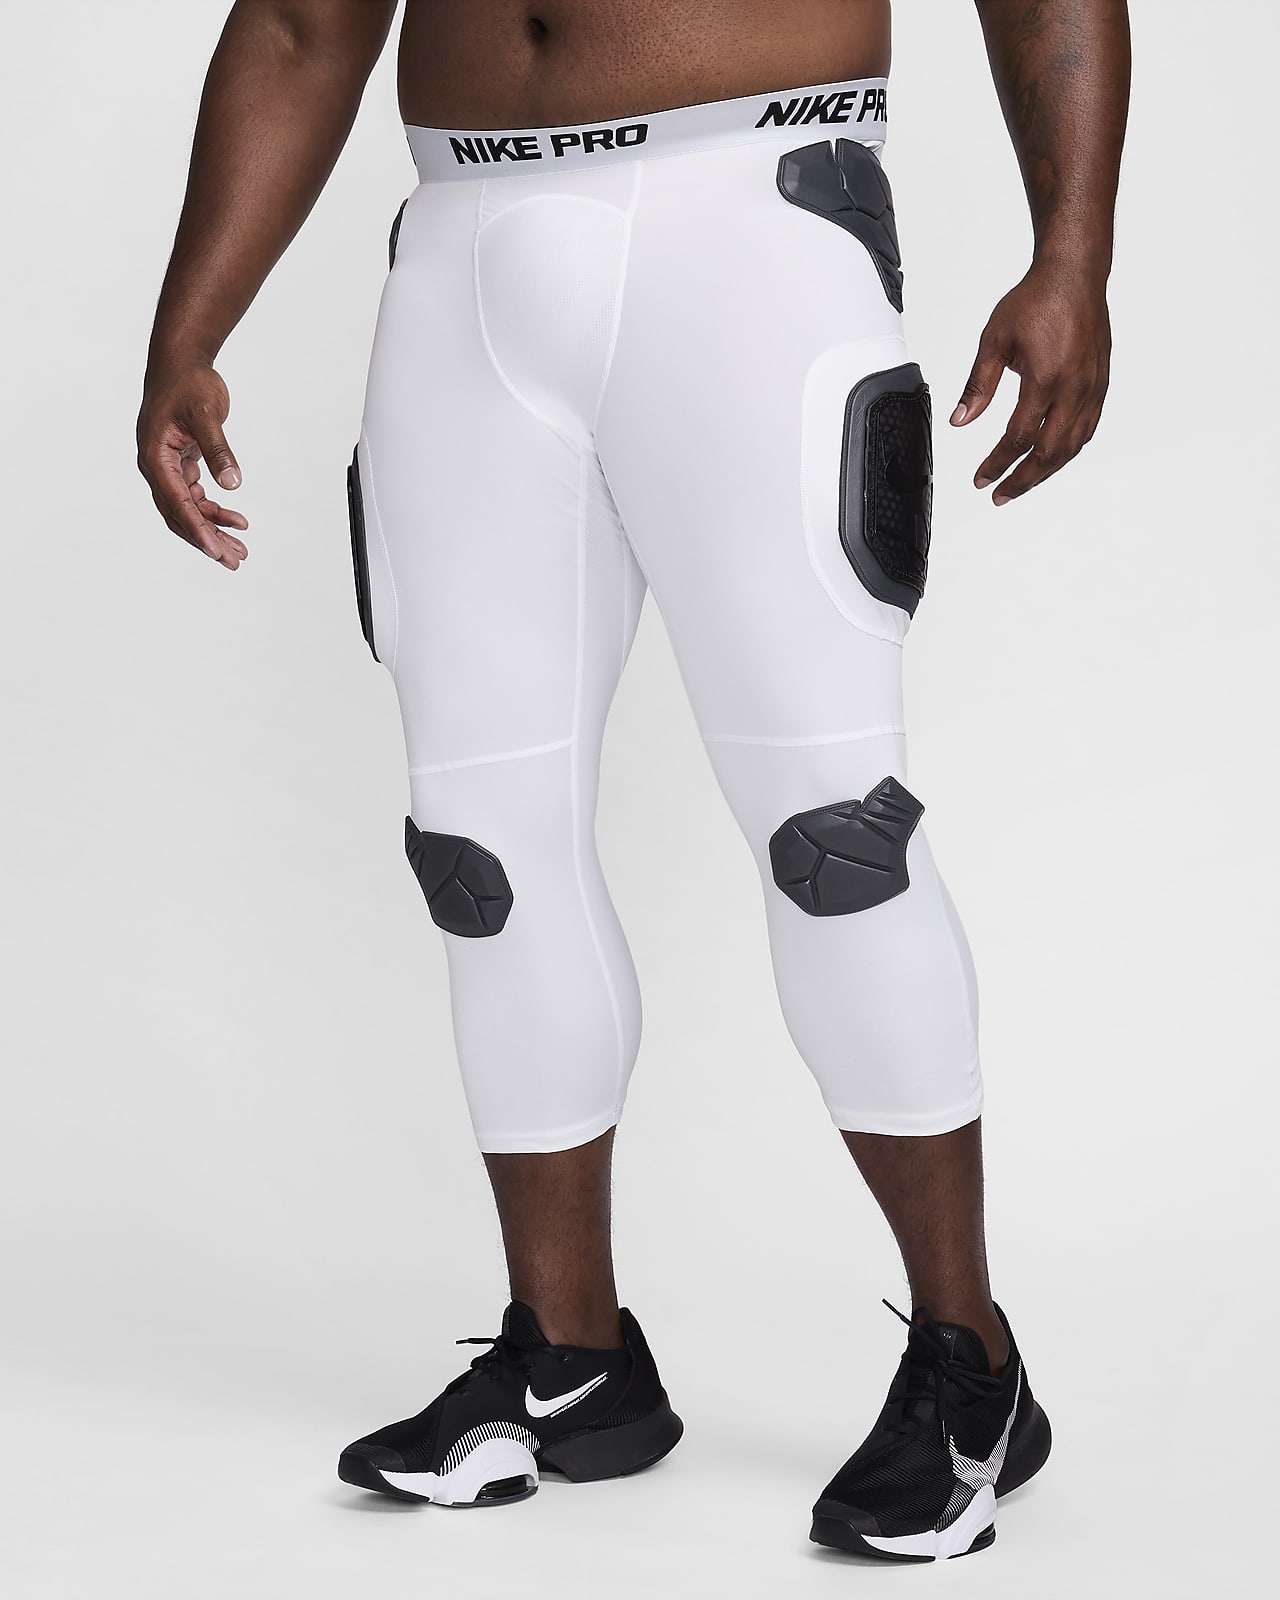 Nike Men's Pro HyperStrong Padded 3/4 Football Tights 4XL XXXXL Pants $85 